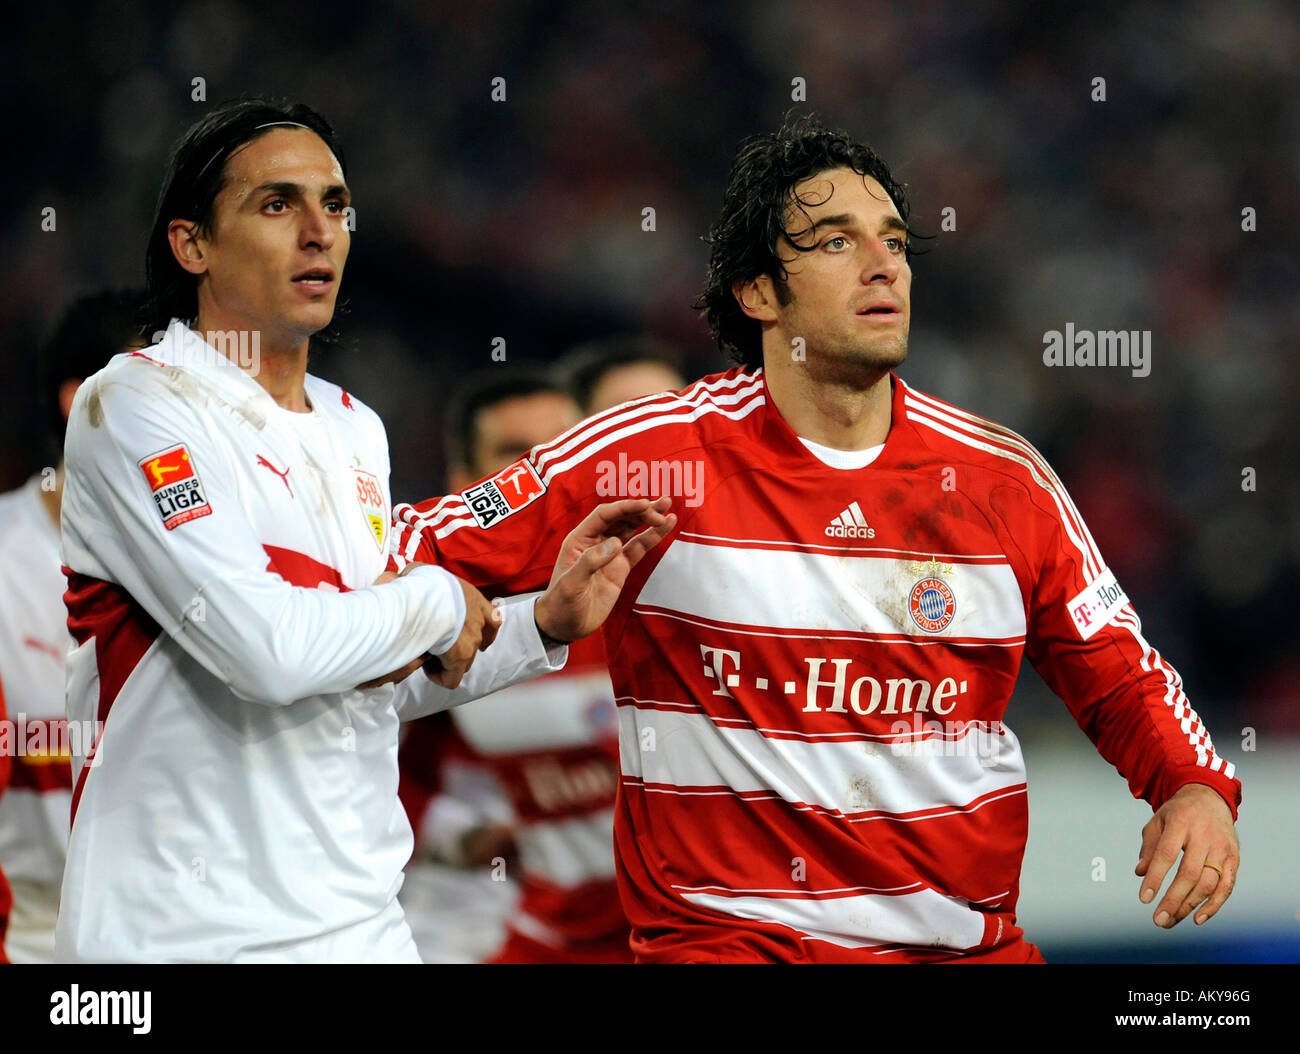 Fernando MEIRA VfB Stuttgart (left) vs. Luca TONI FC Bayern Muenchen (right) Stock Photo